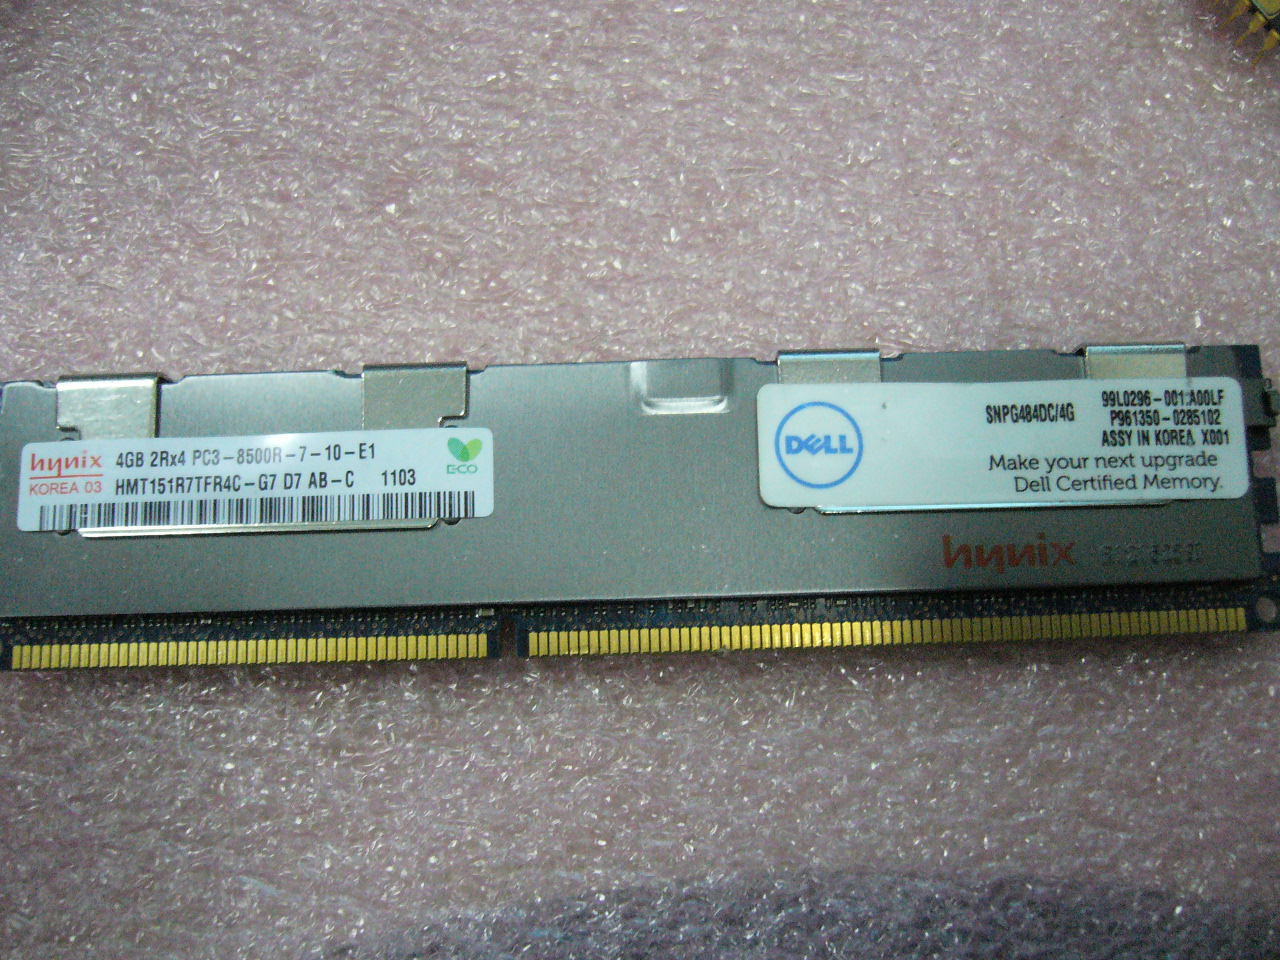 QTY 1x 4GB Dell DDR3 2Rx4 PC3-8500R ECC Registered Server memory SNPG484DC/4G - Click Image to Close